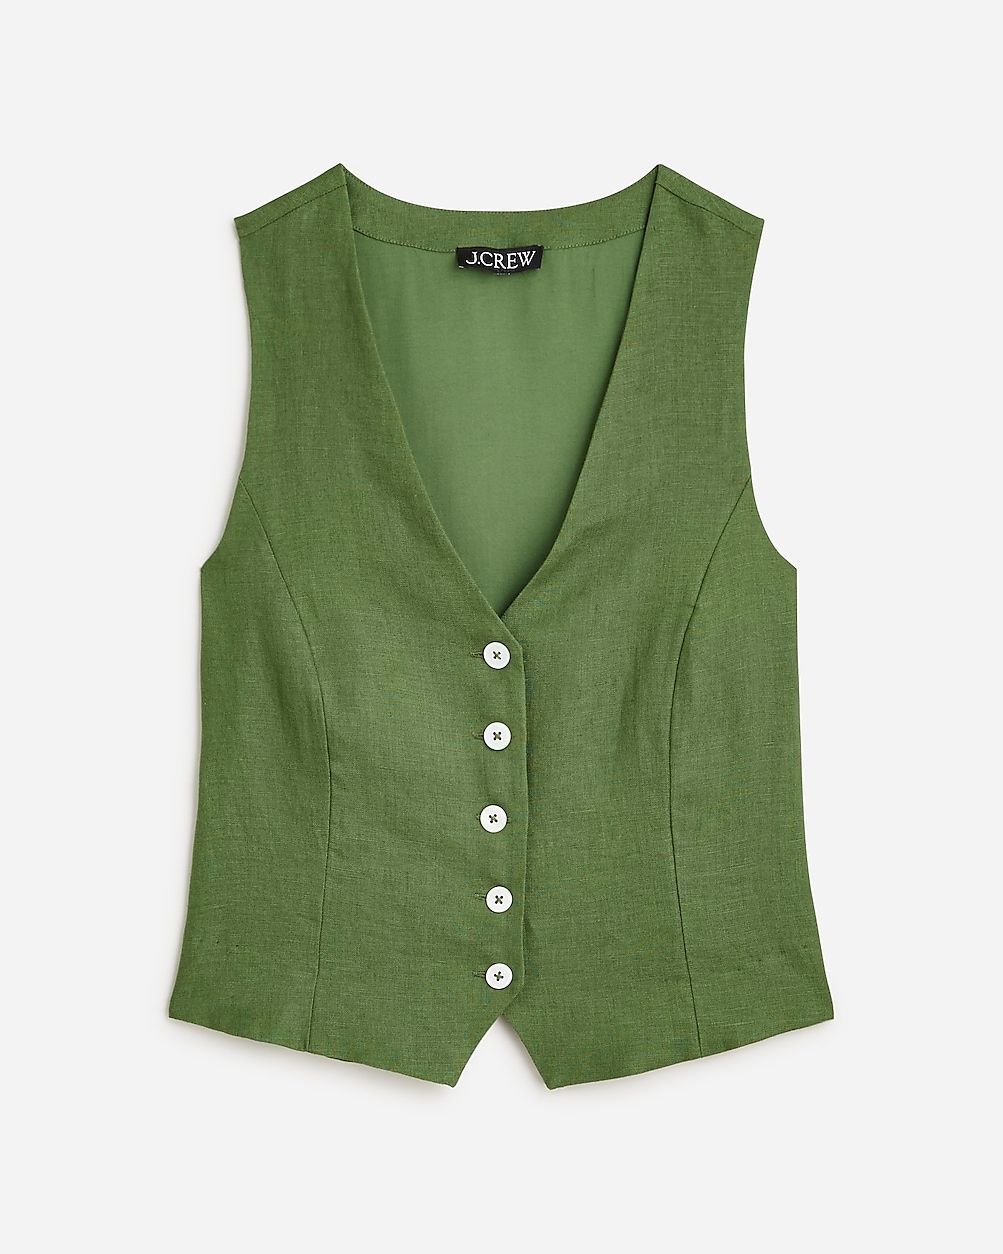 Shop this lookbest seller4.6(53 REVIEWS)Slim-fit linen vest$56.50$89.50 (37% Off)Limited time. Pr... | J.Crew US